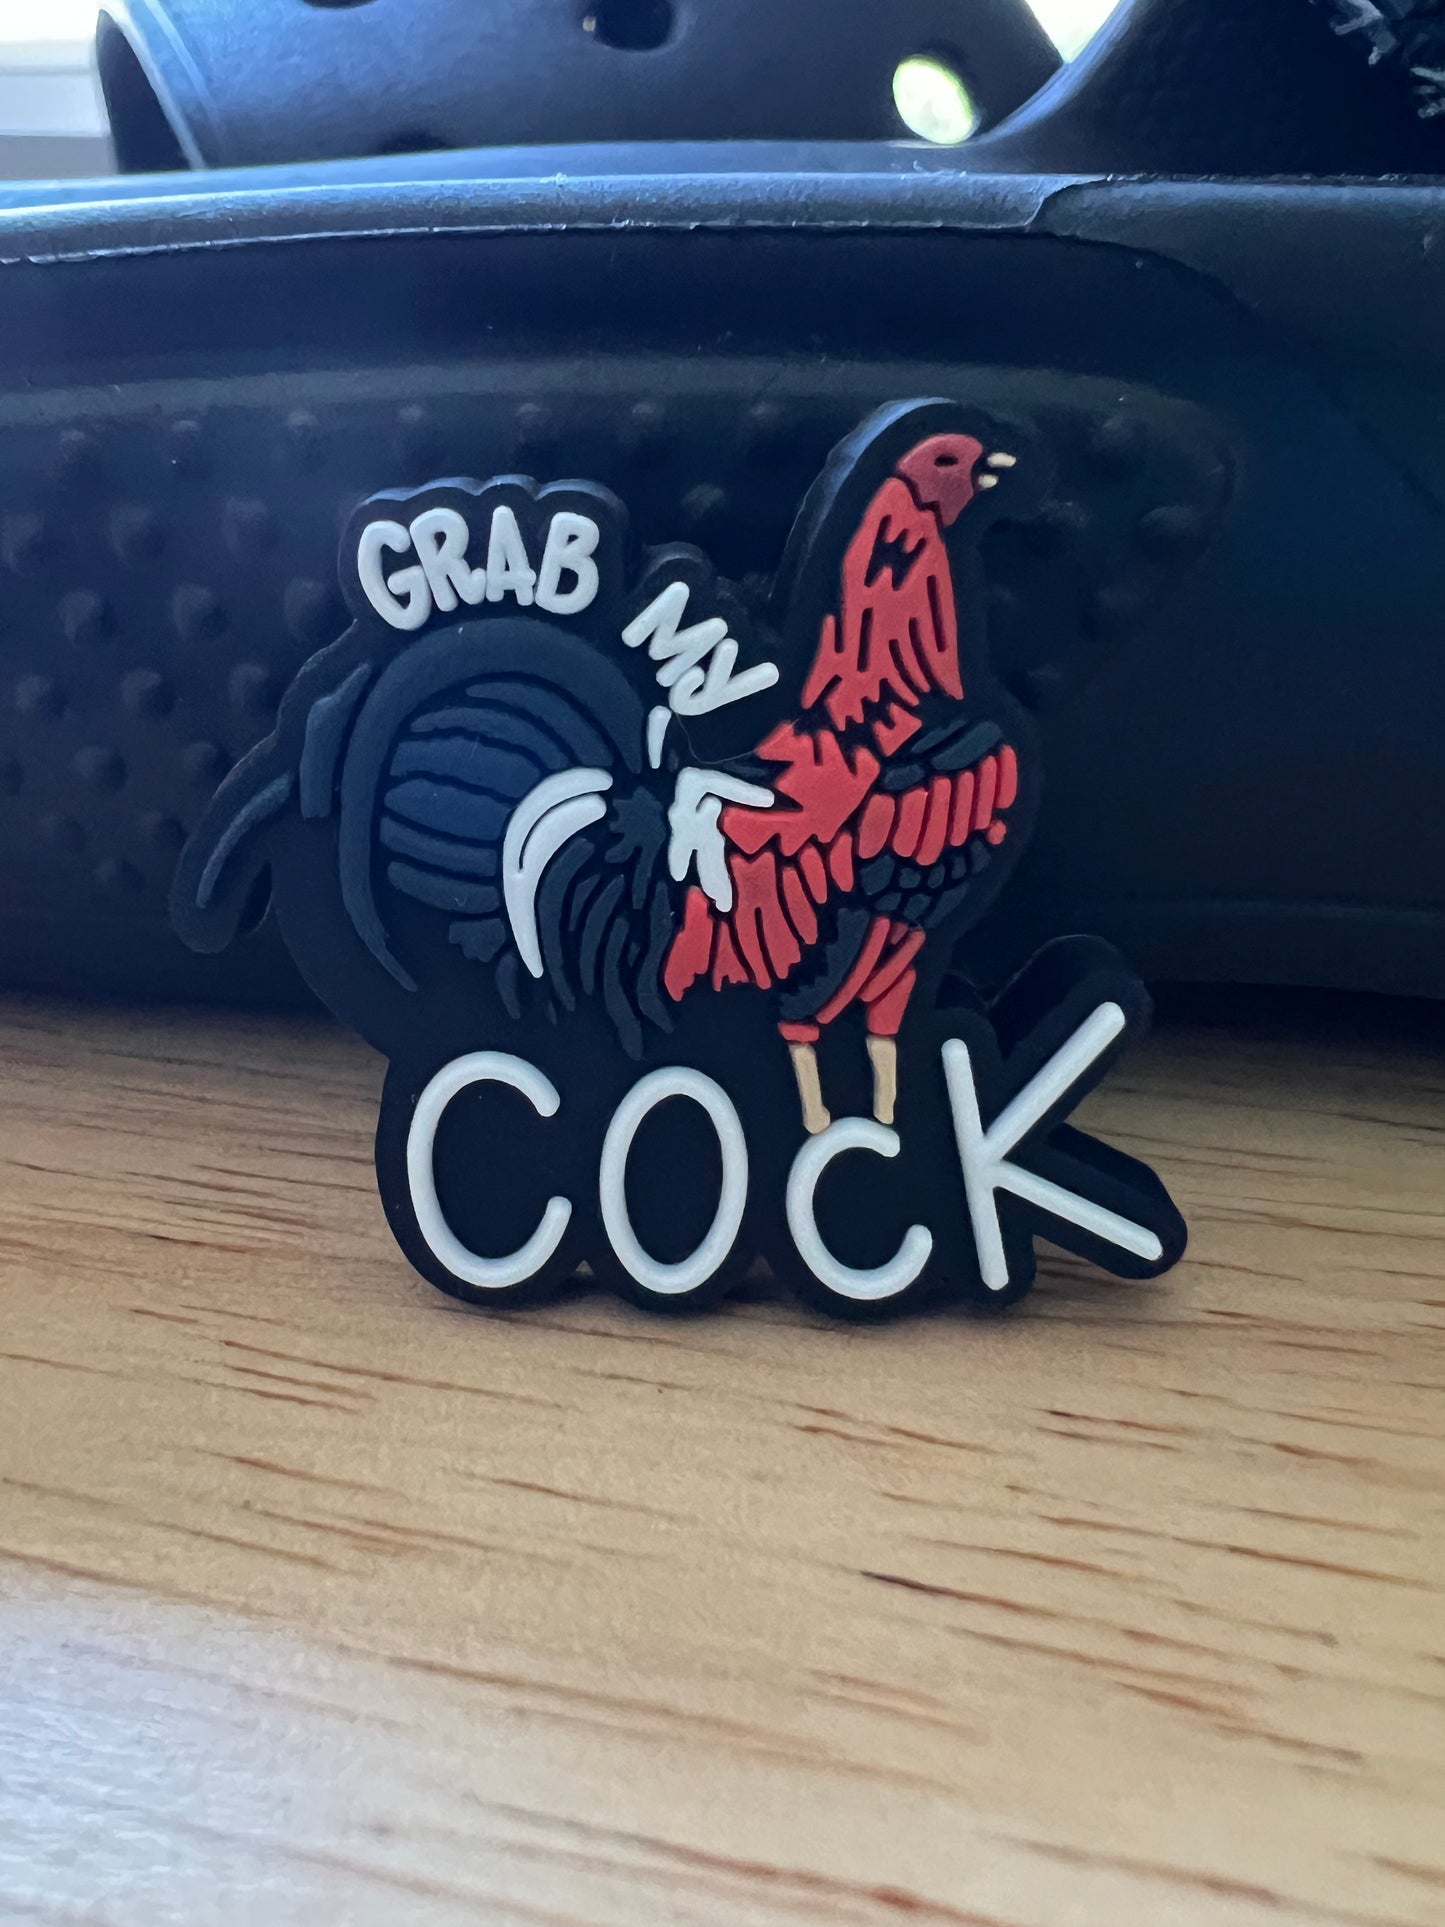 Grab my cock jibbitz